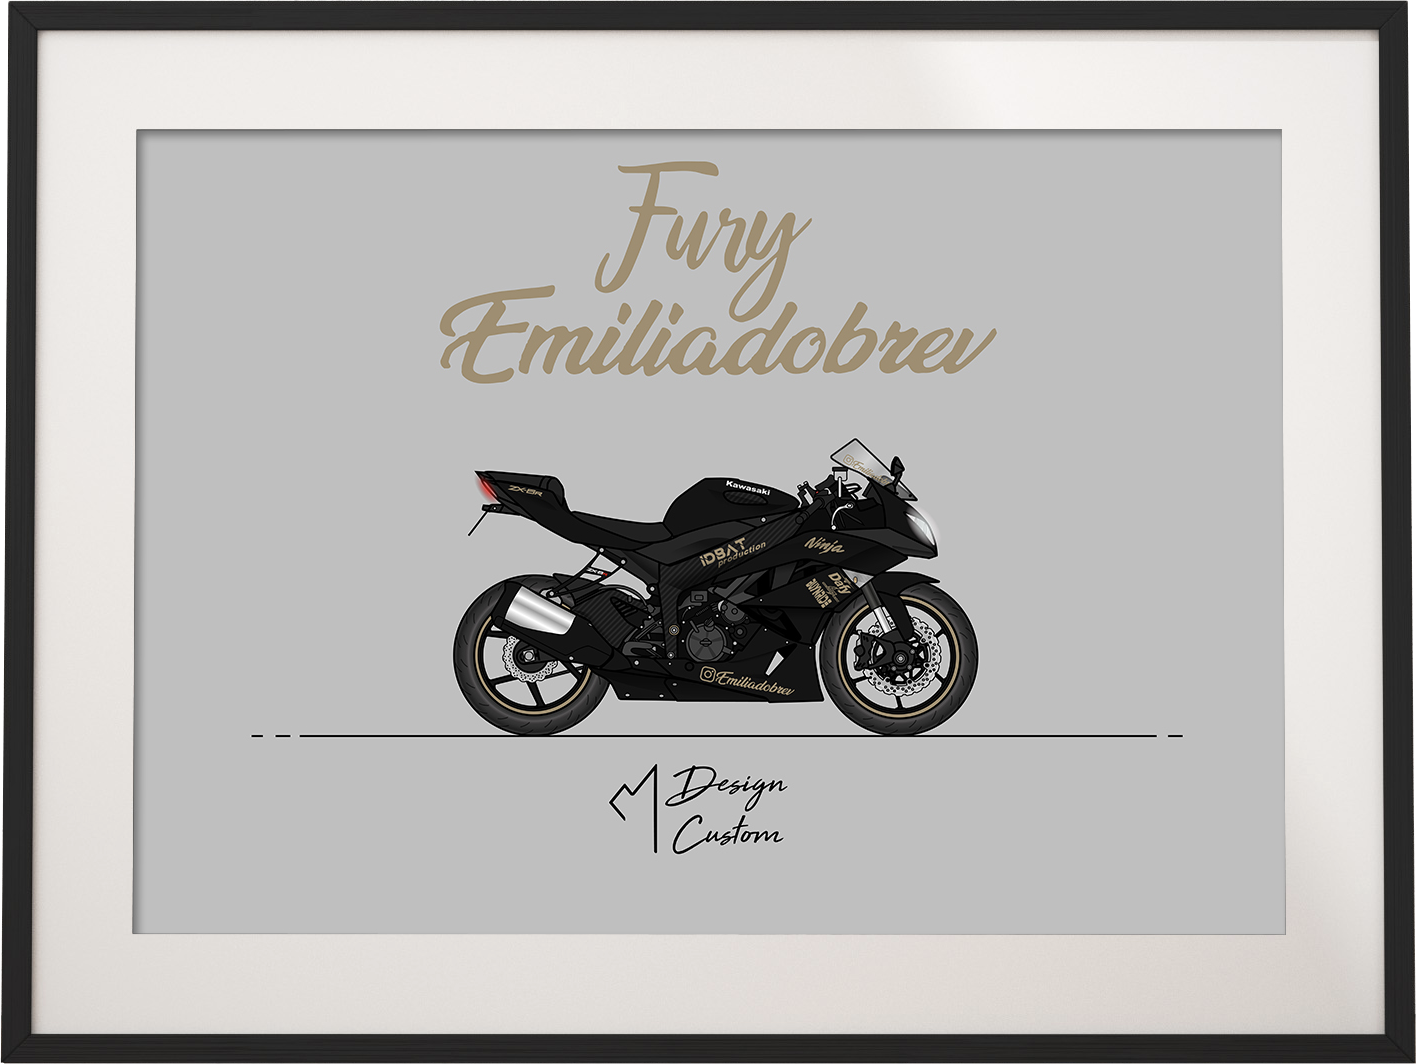 Personalized motorbike card and design - CM Design Custom